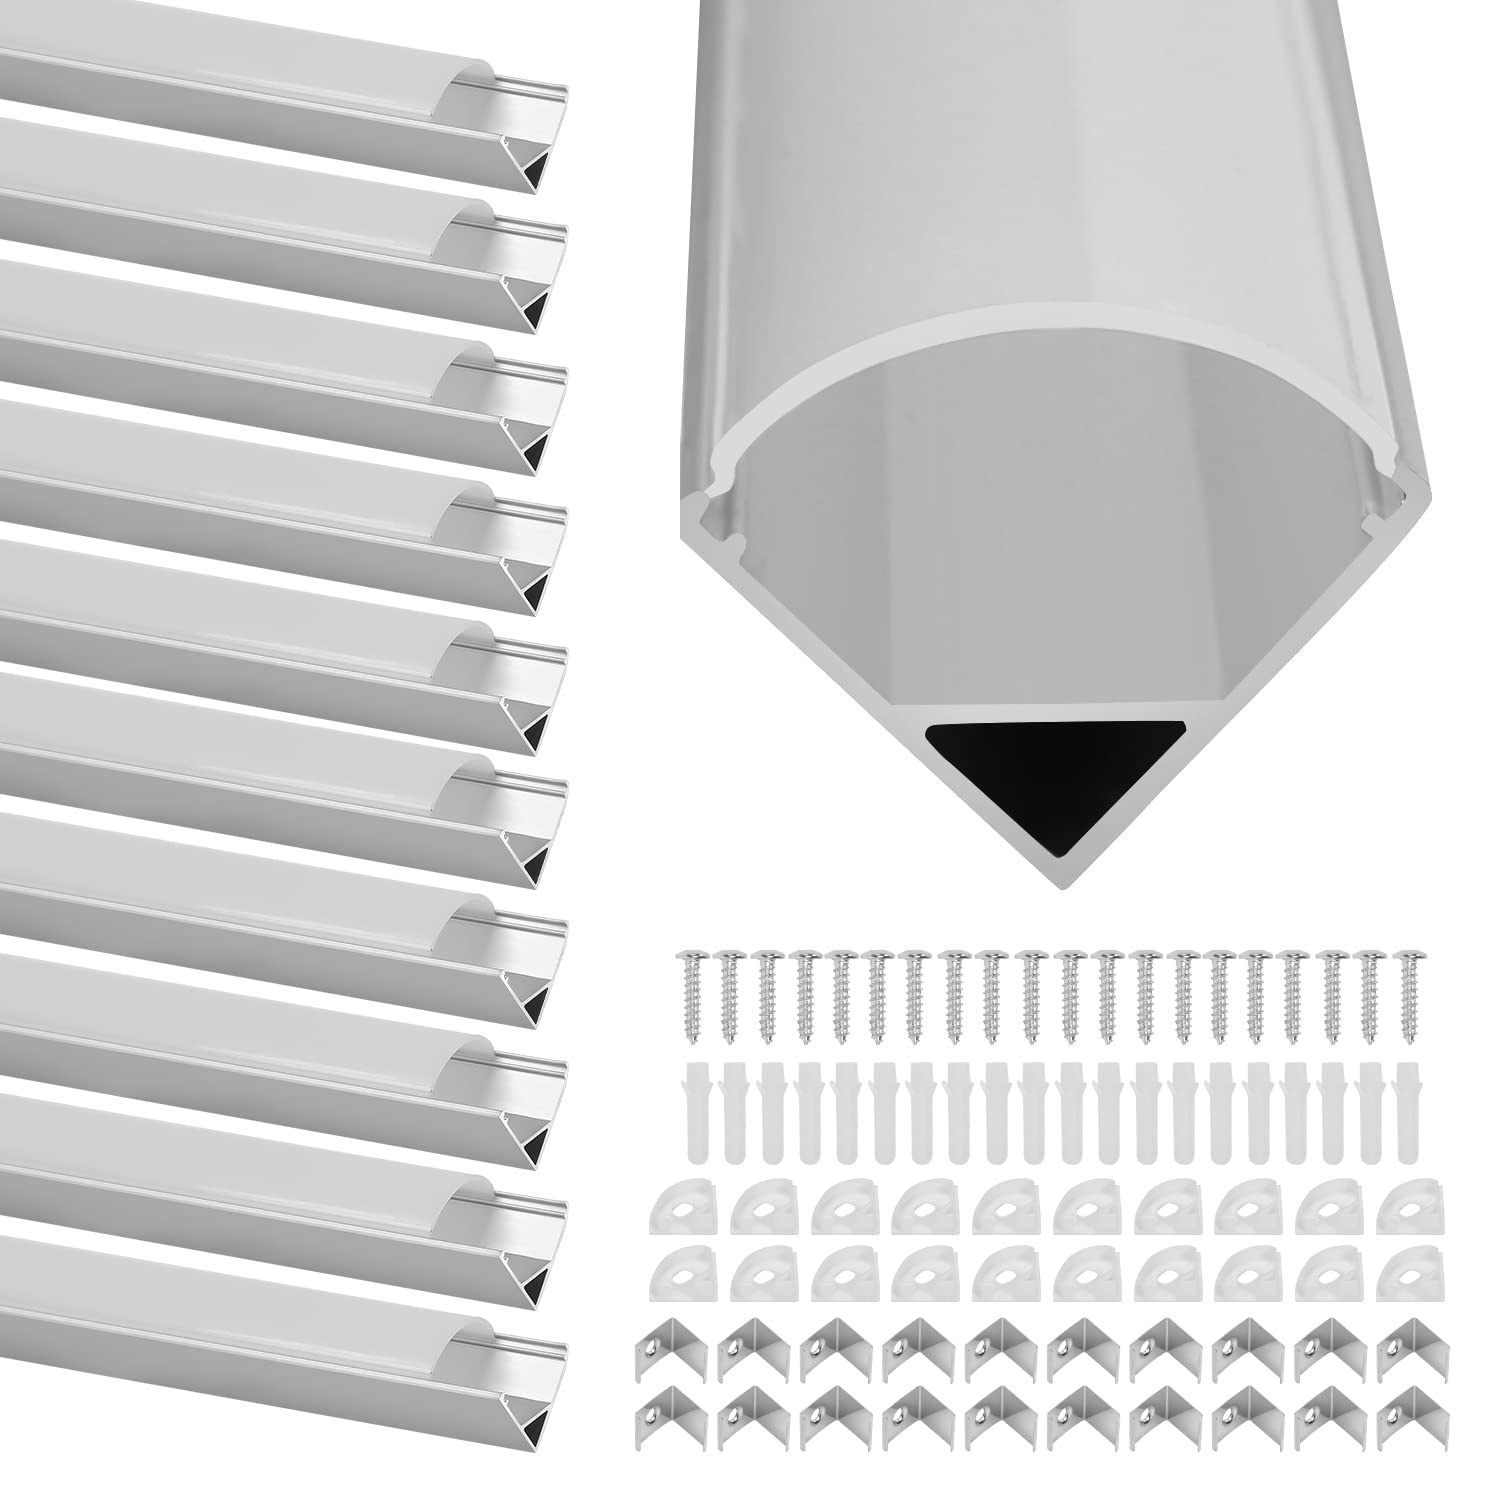 Gimisgu LED Profil Aluminium 1m 40 Pack V-Form Aluprofil für LED Stripe/Strip/Streifen/Band LED Aluminium Profil silber inkl. Abdeckung, Montageclips und Eckverbindern